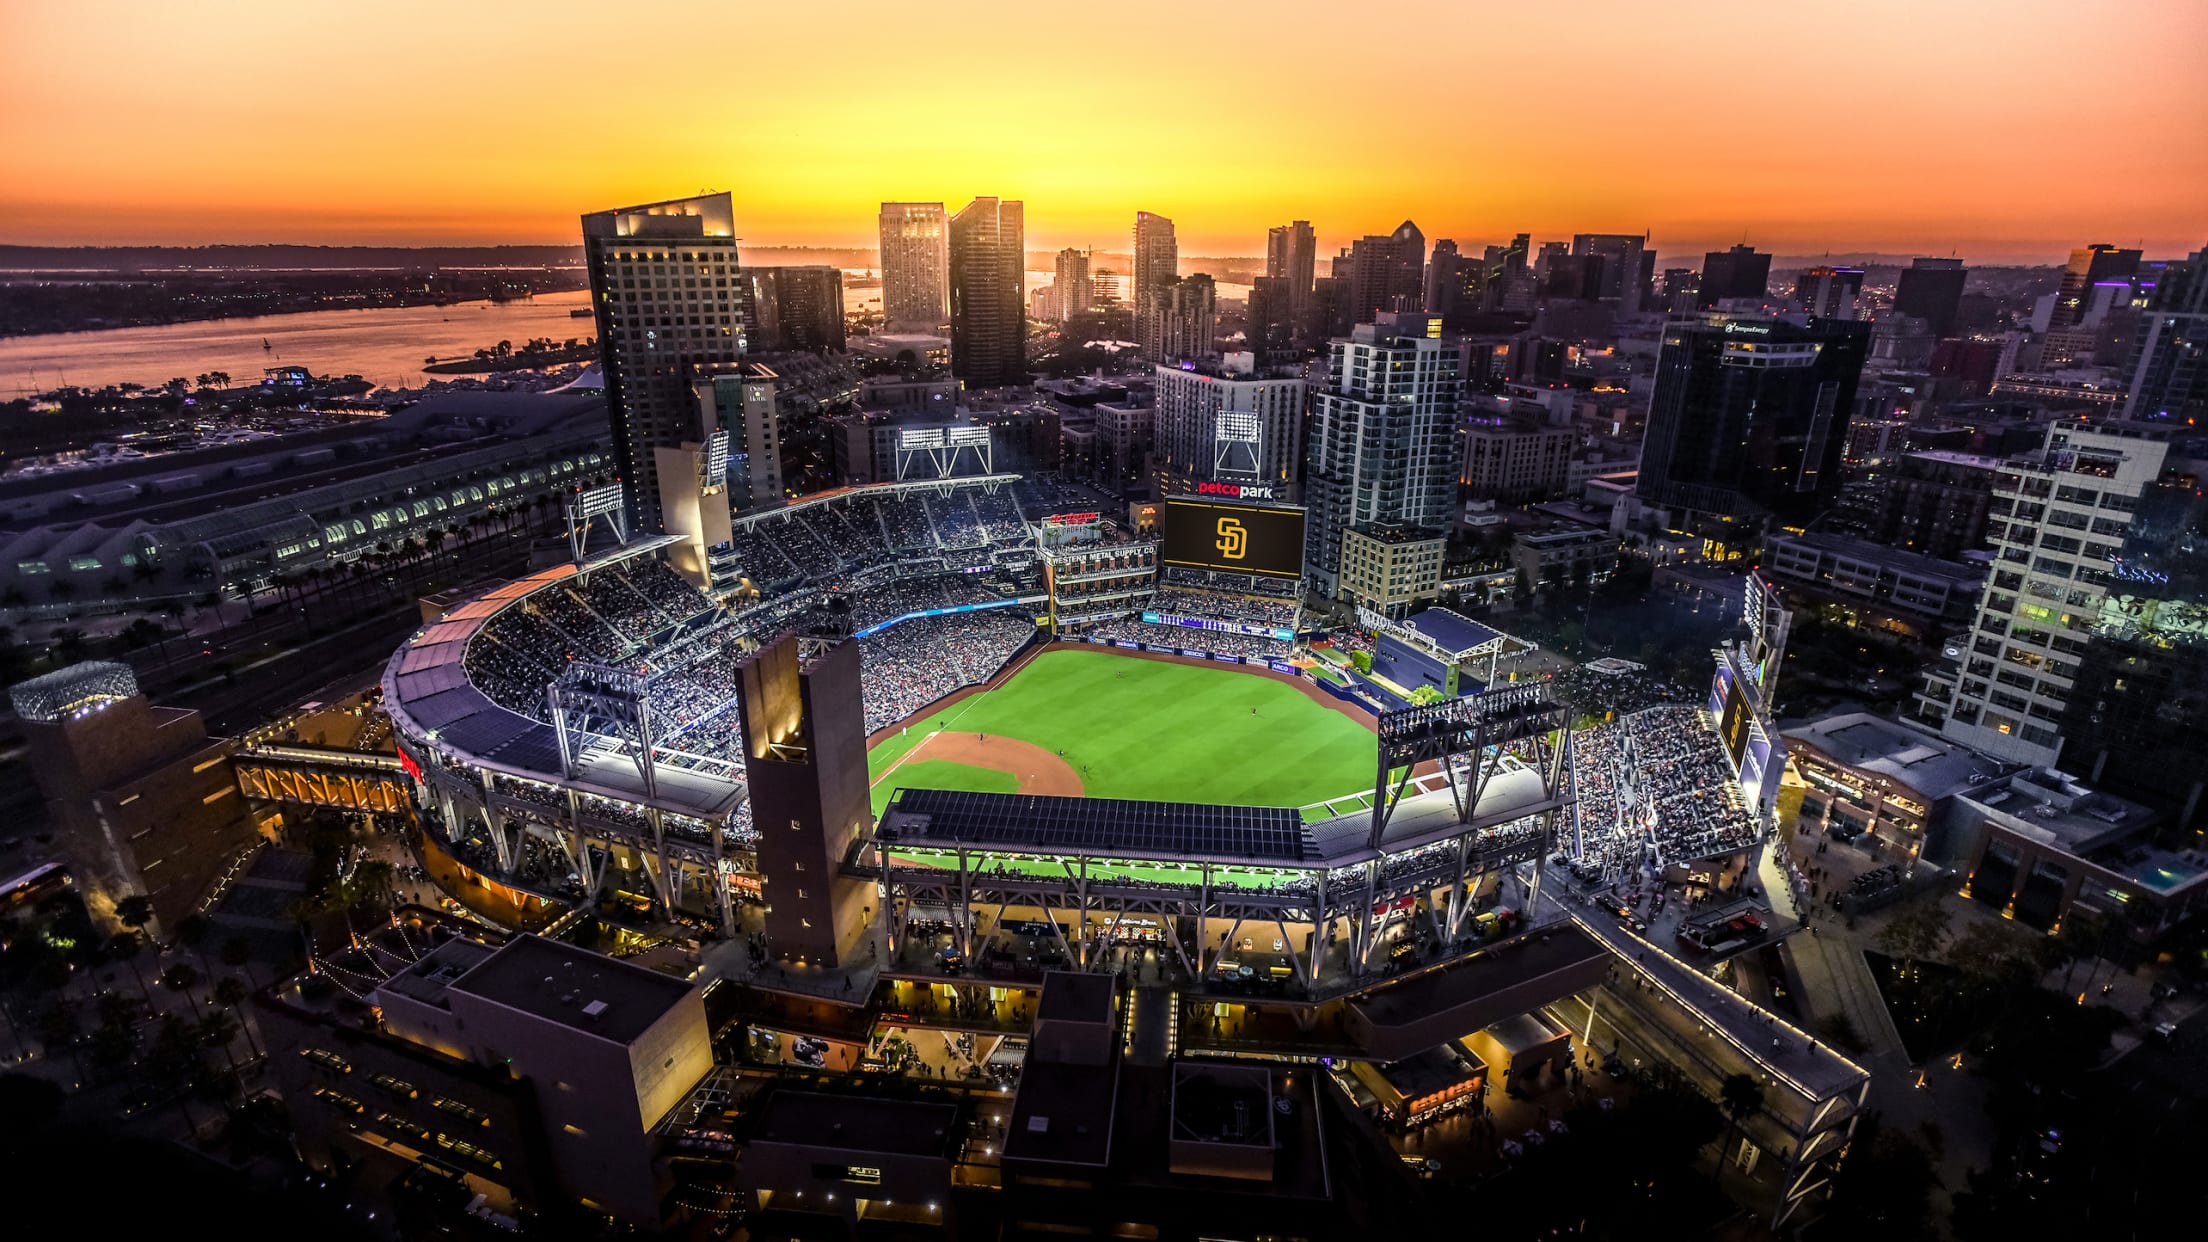 San Diego Padres on X: Tuesday night dub in Denver 🙌 #PadresWin